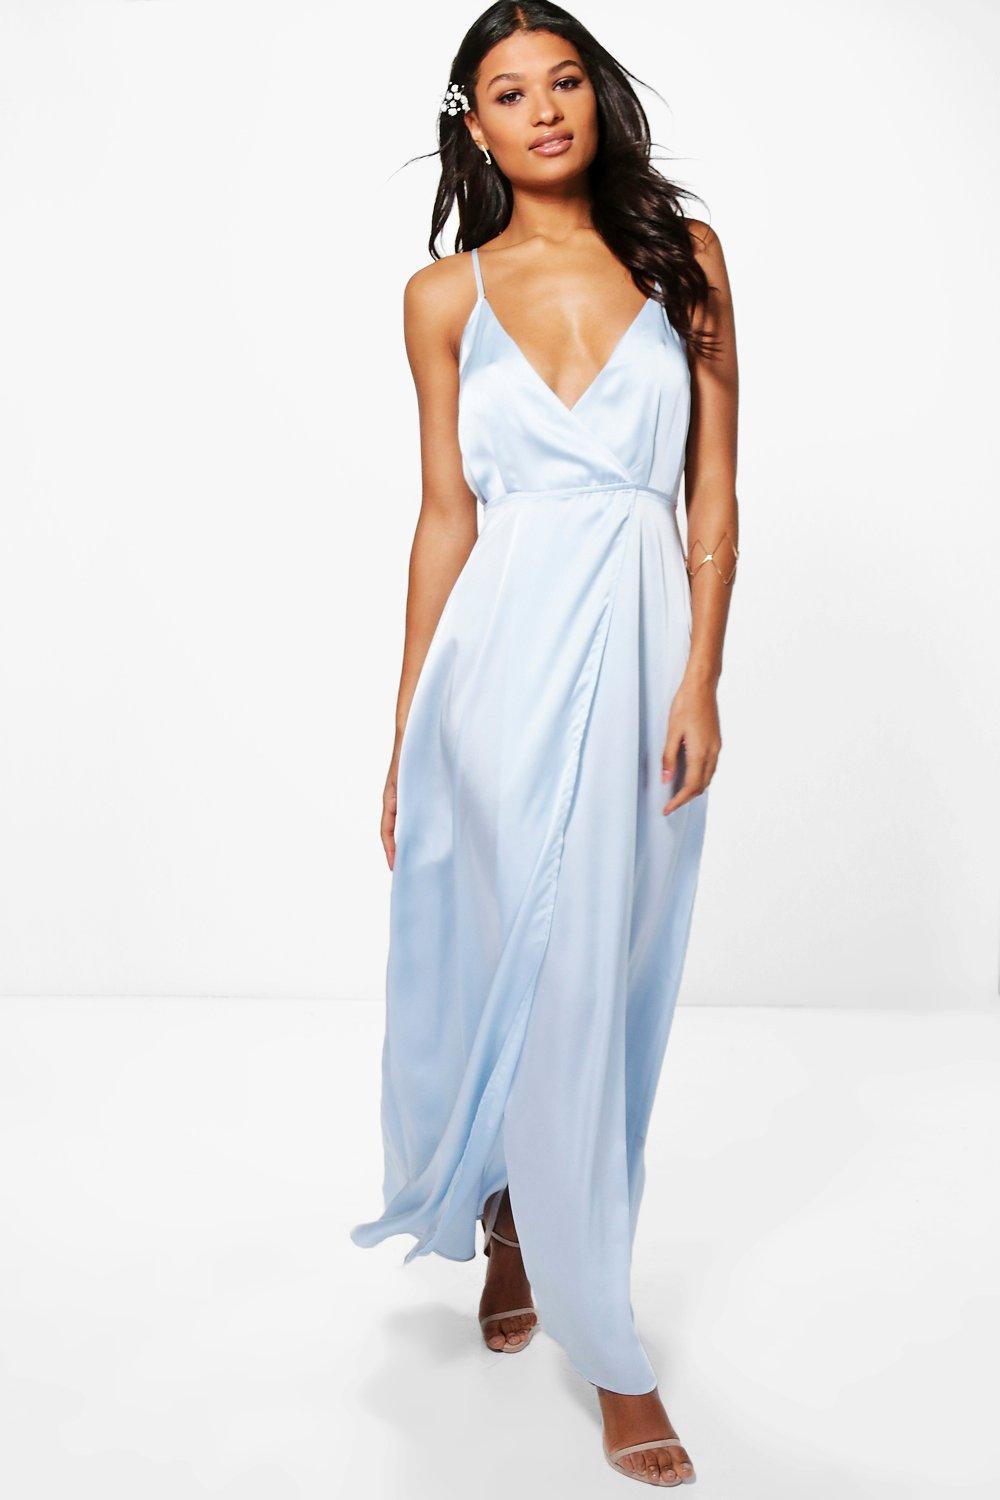 Boohoo Womens Boutique Ondine Satin Strappy Wrap Maxi Dress | eBay